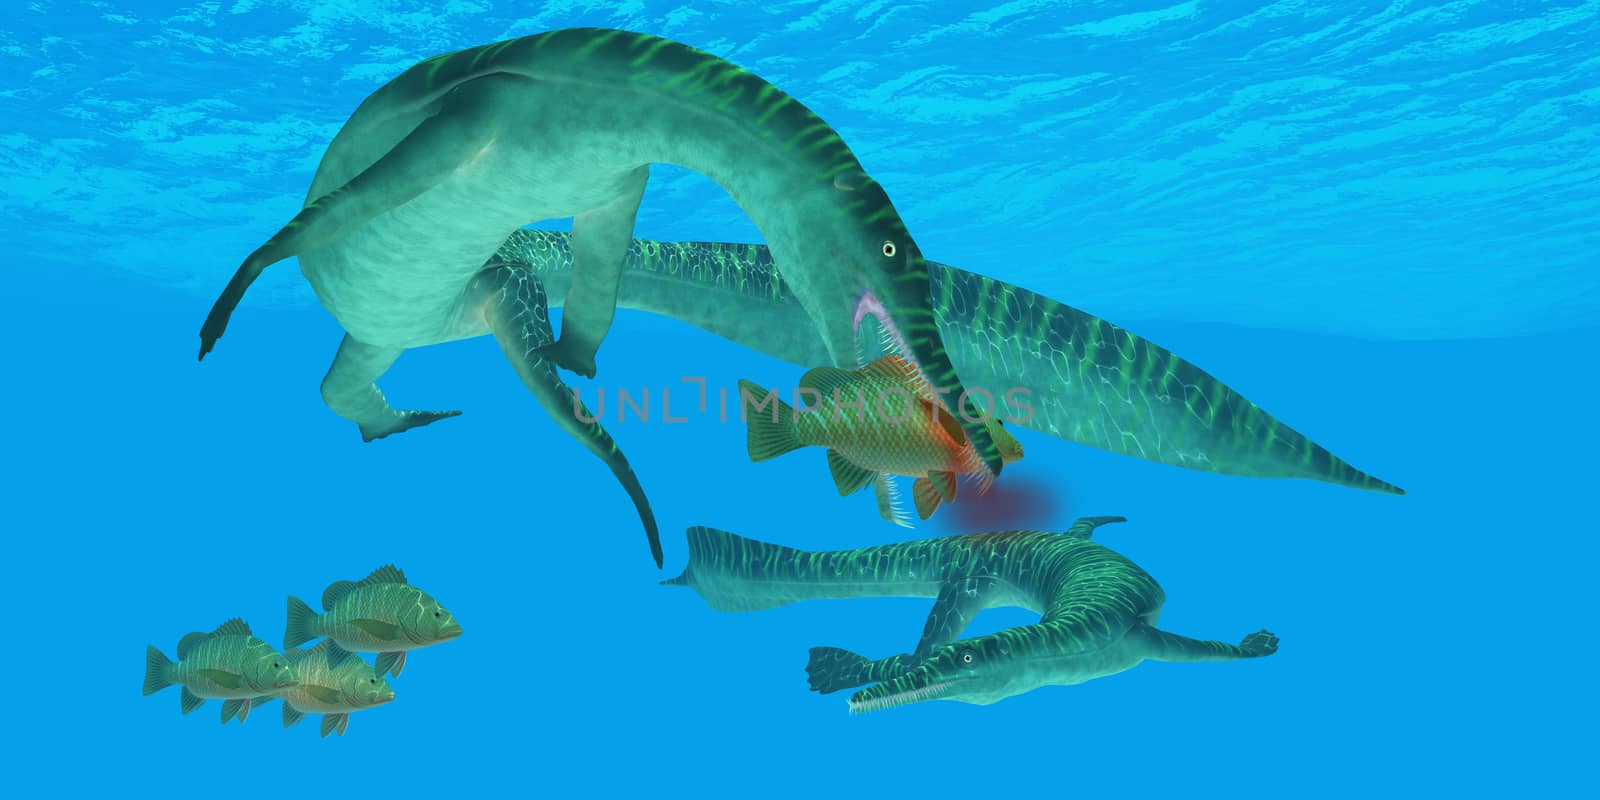 Mesosaurus Marine Reptile by Catmando